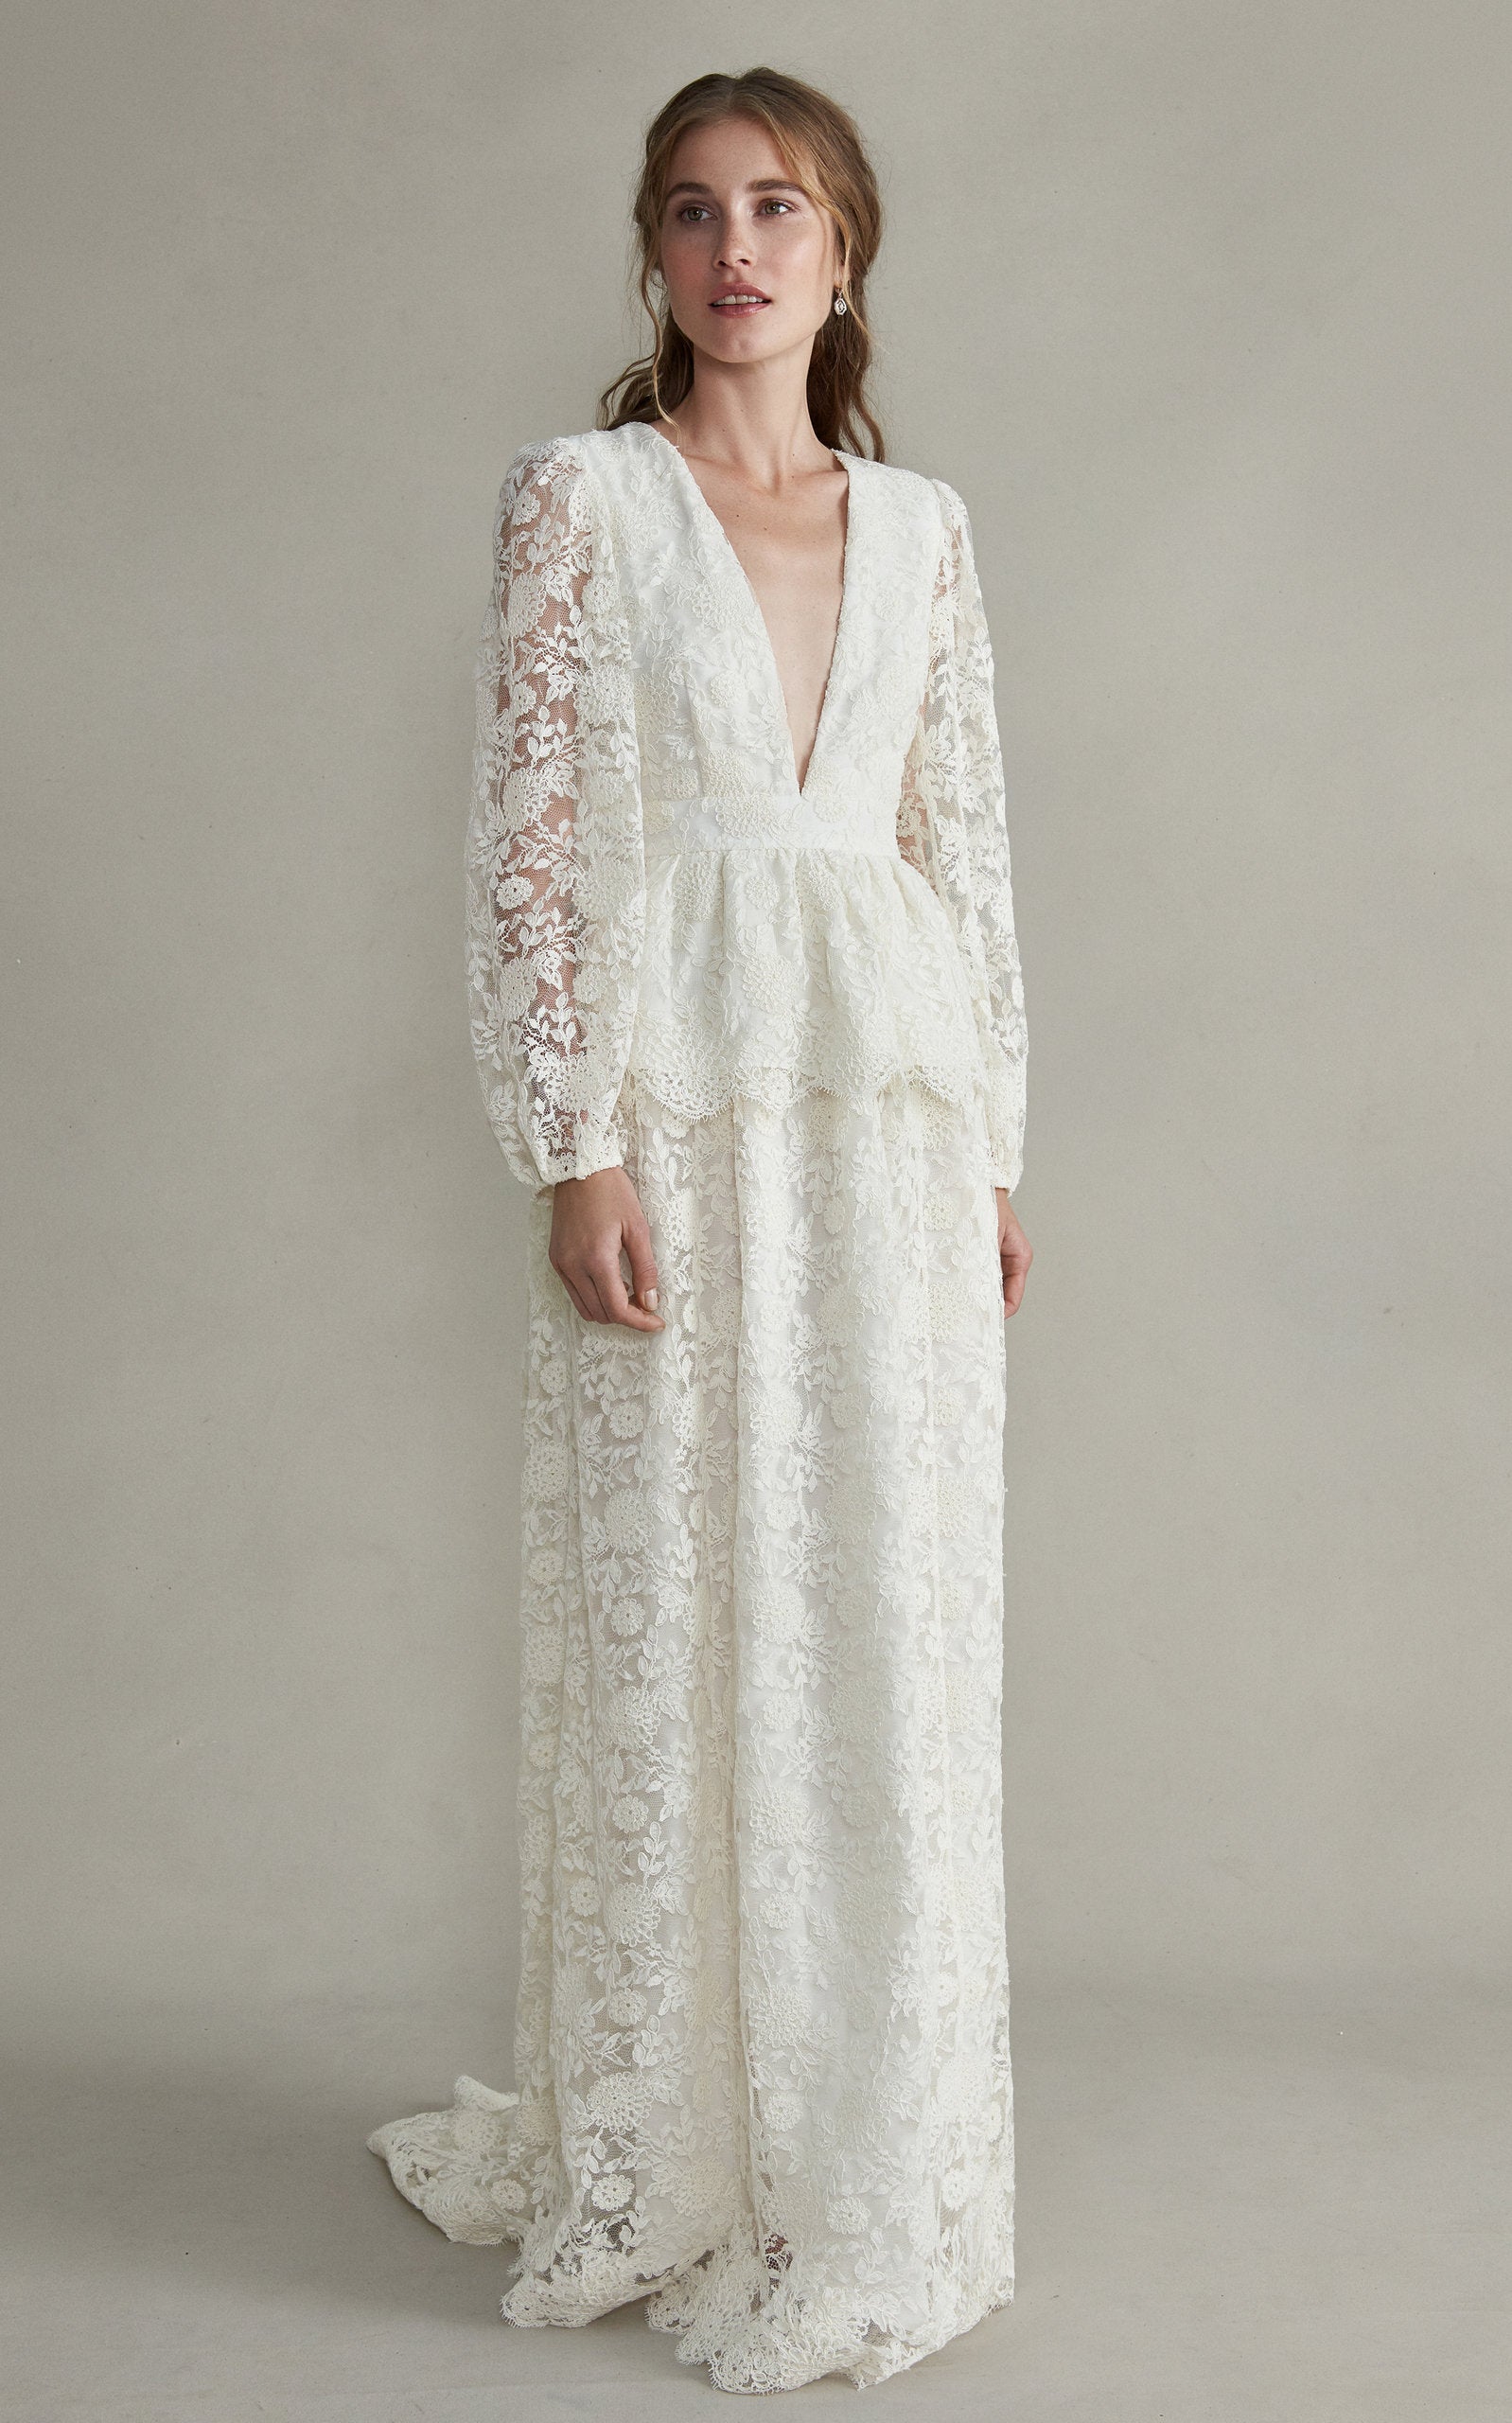 Aphrodite White Lace Gown